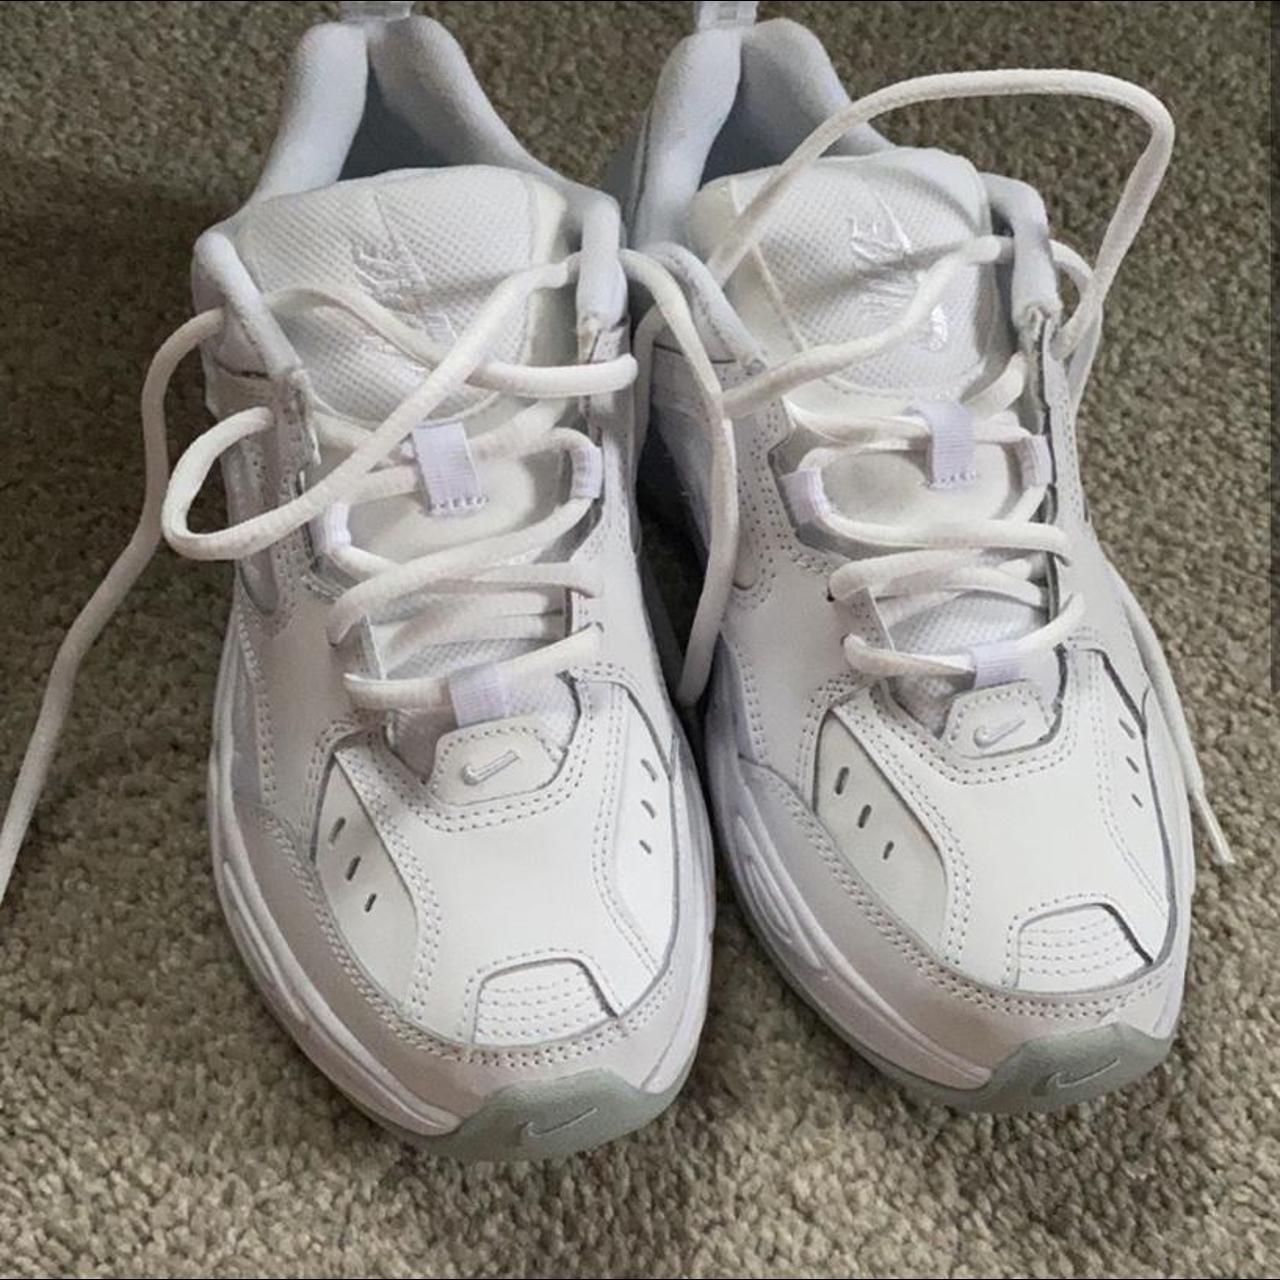 Product Image 2 - Nike M2k Tekno white shoes